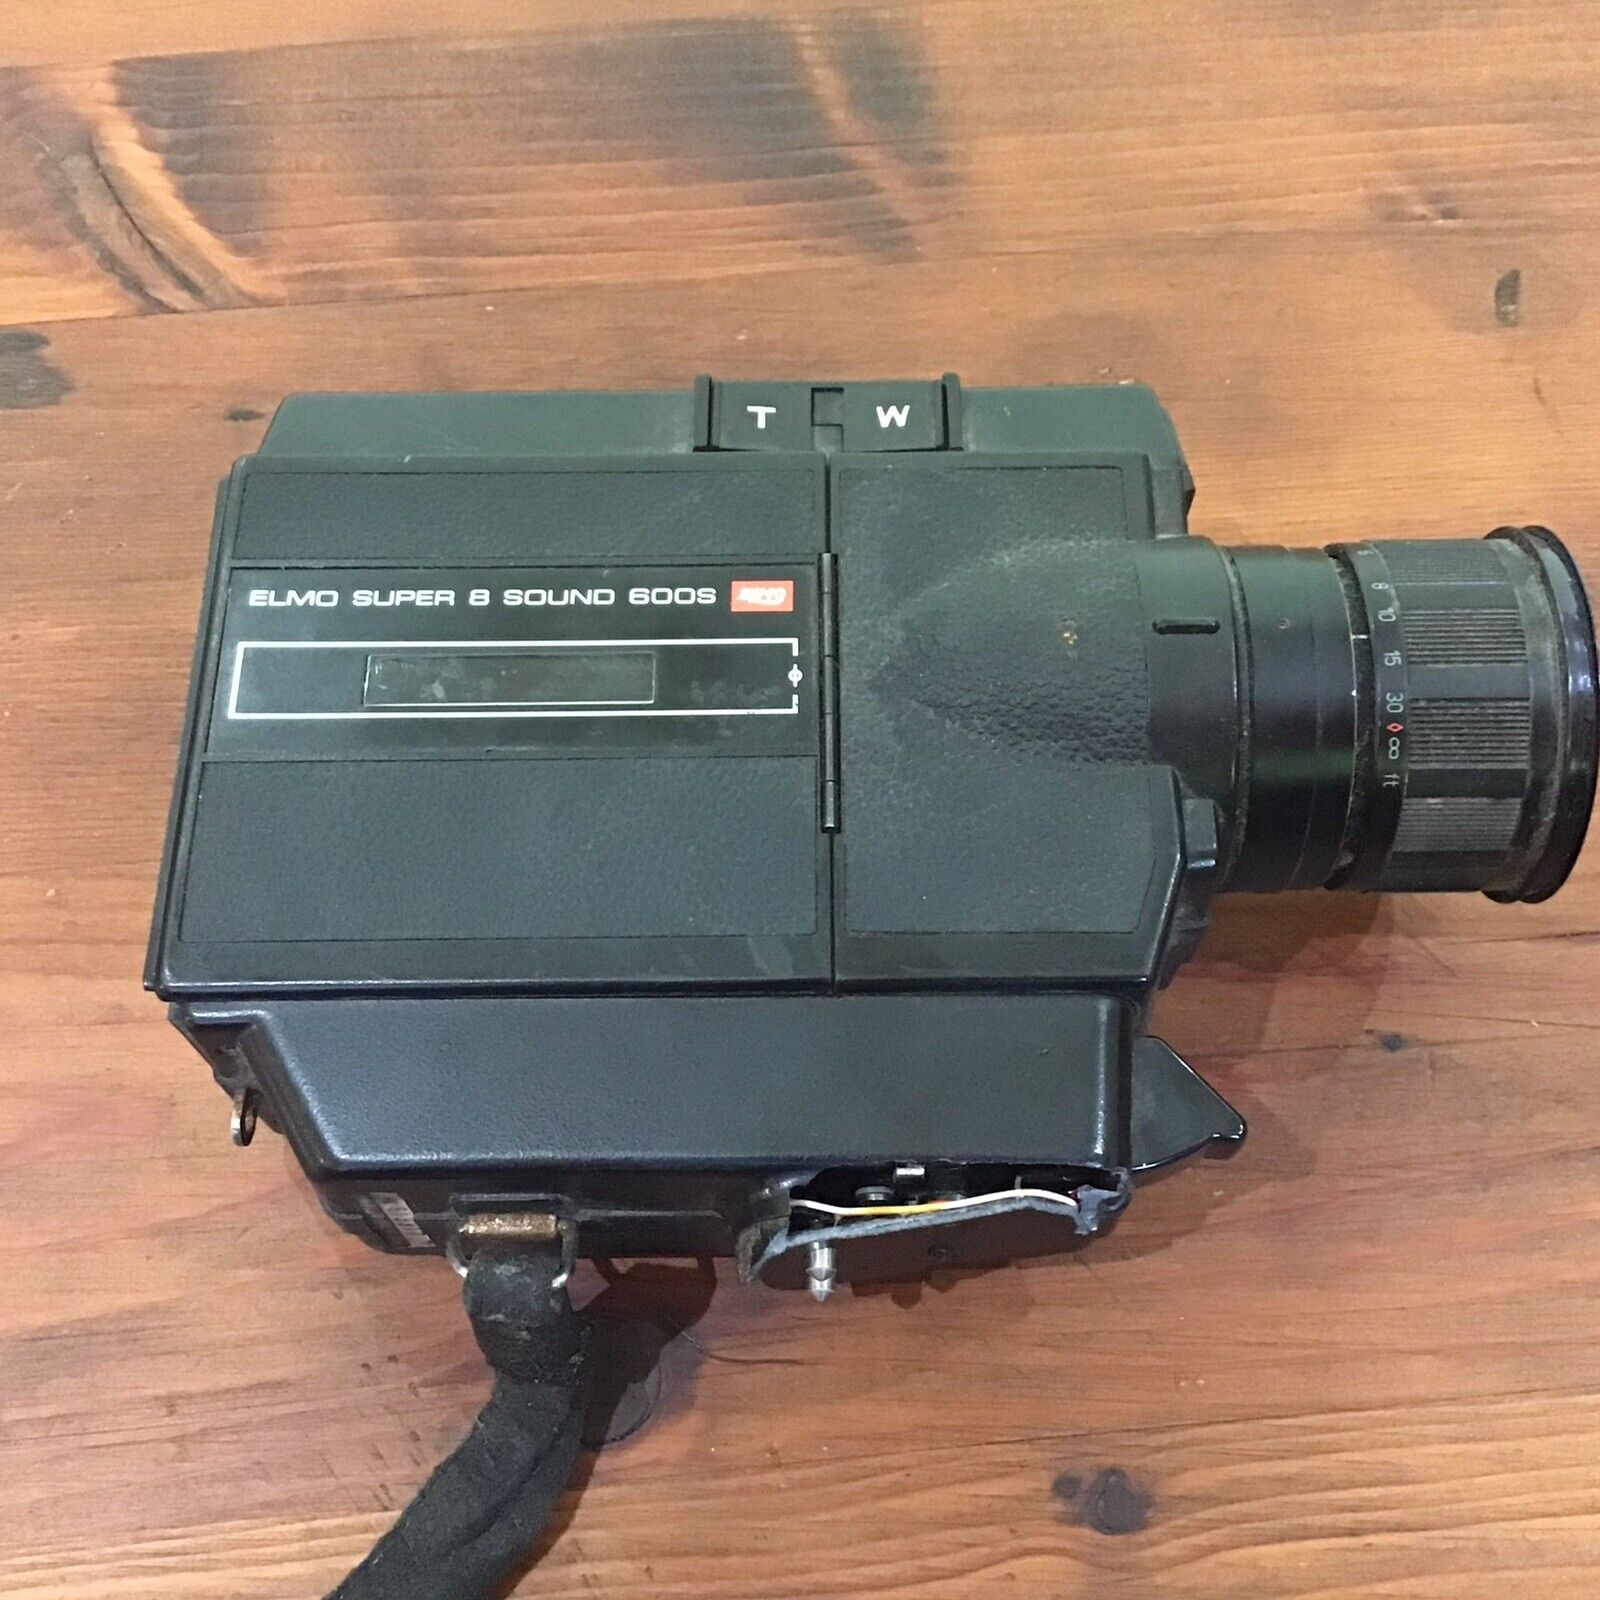 Elmo Super 8 Sound 600S Movie Camera | eBay